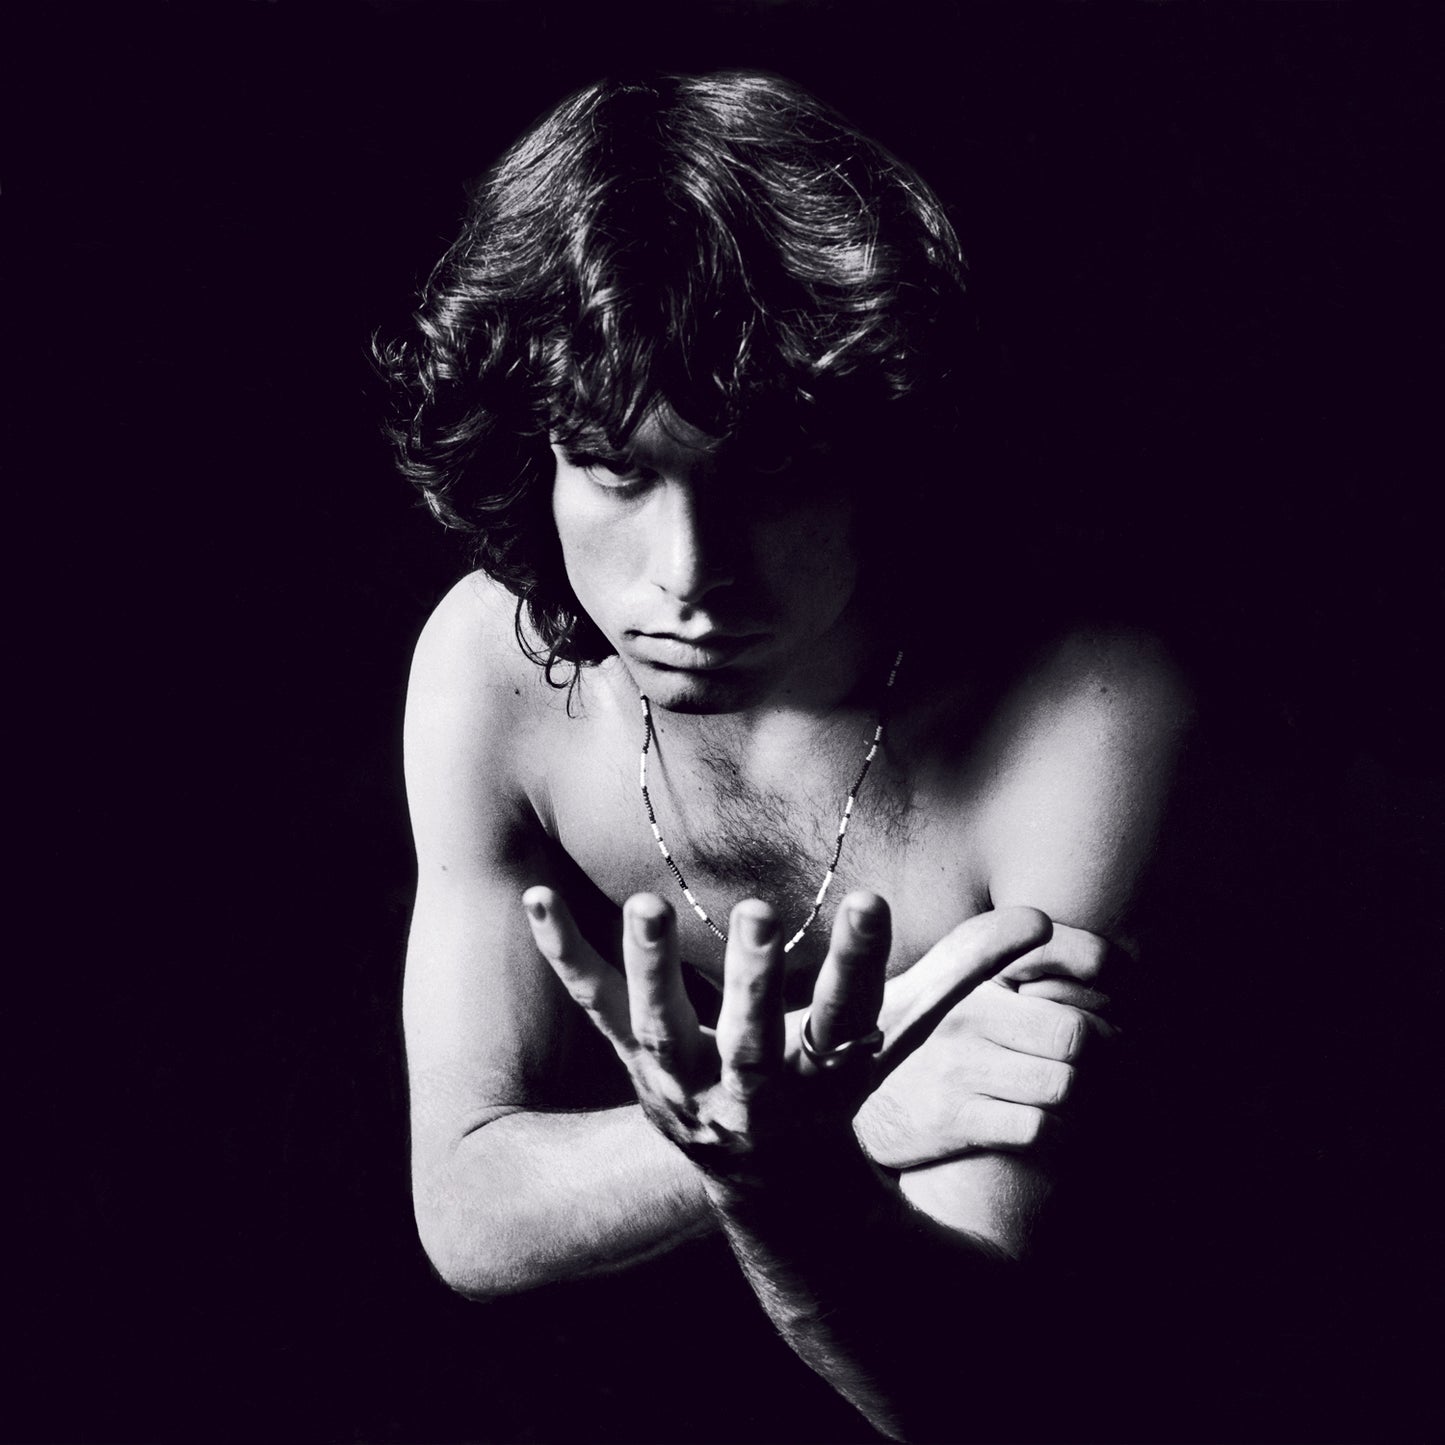 Jim Morrison, The Doors, "The Grasp" New York City, 1967 by Joel Brodsky